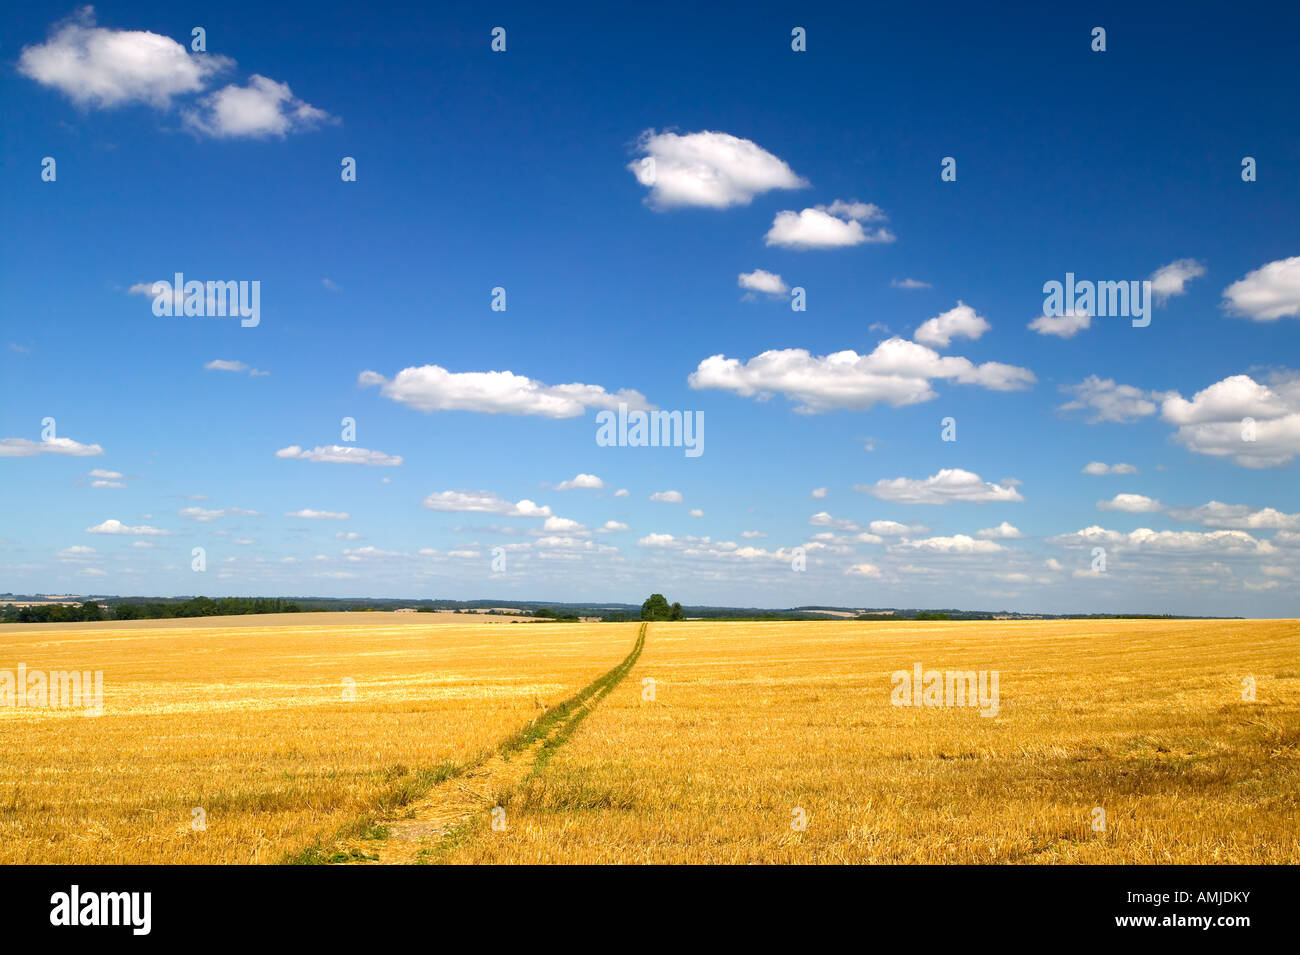 Landscape of a golden field under blue cloudy sky Stock Photo